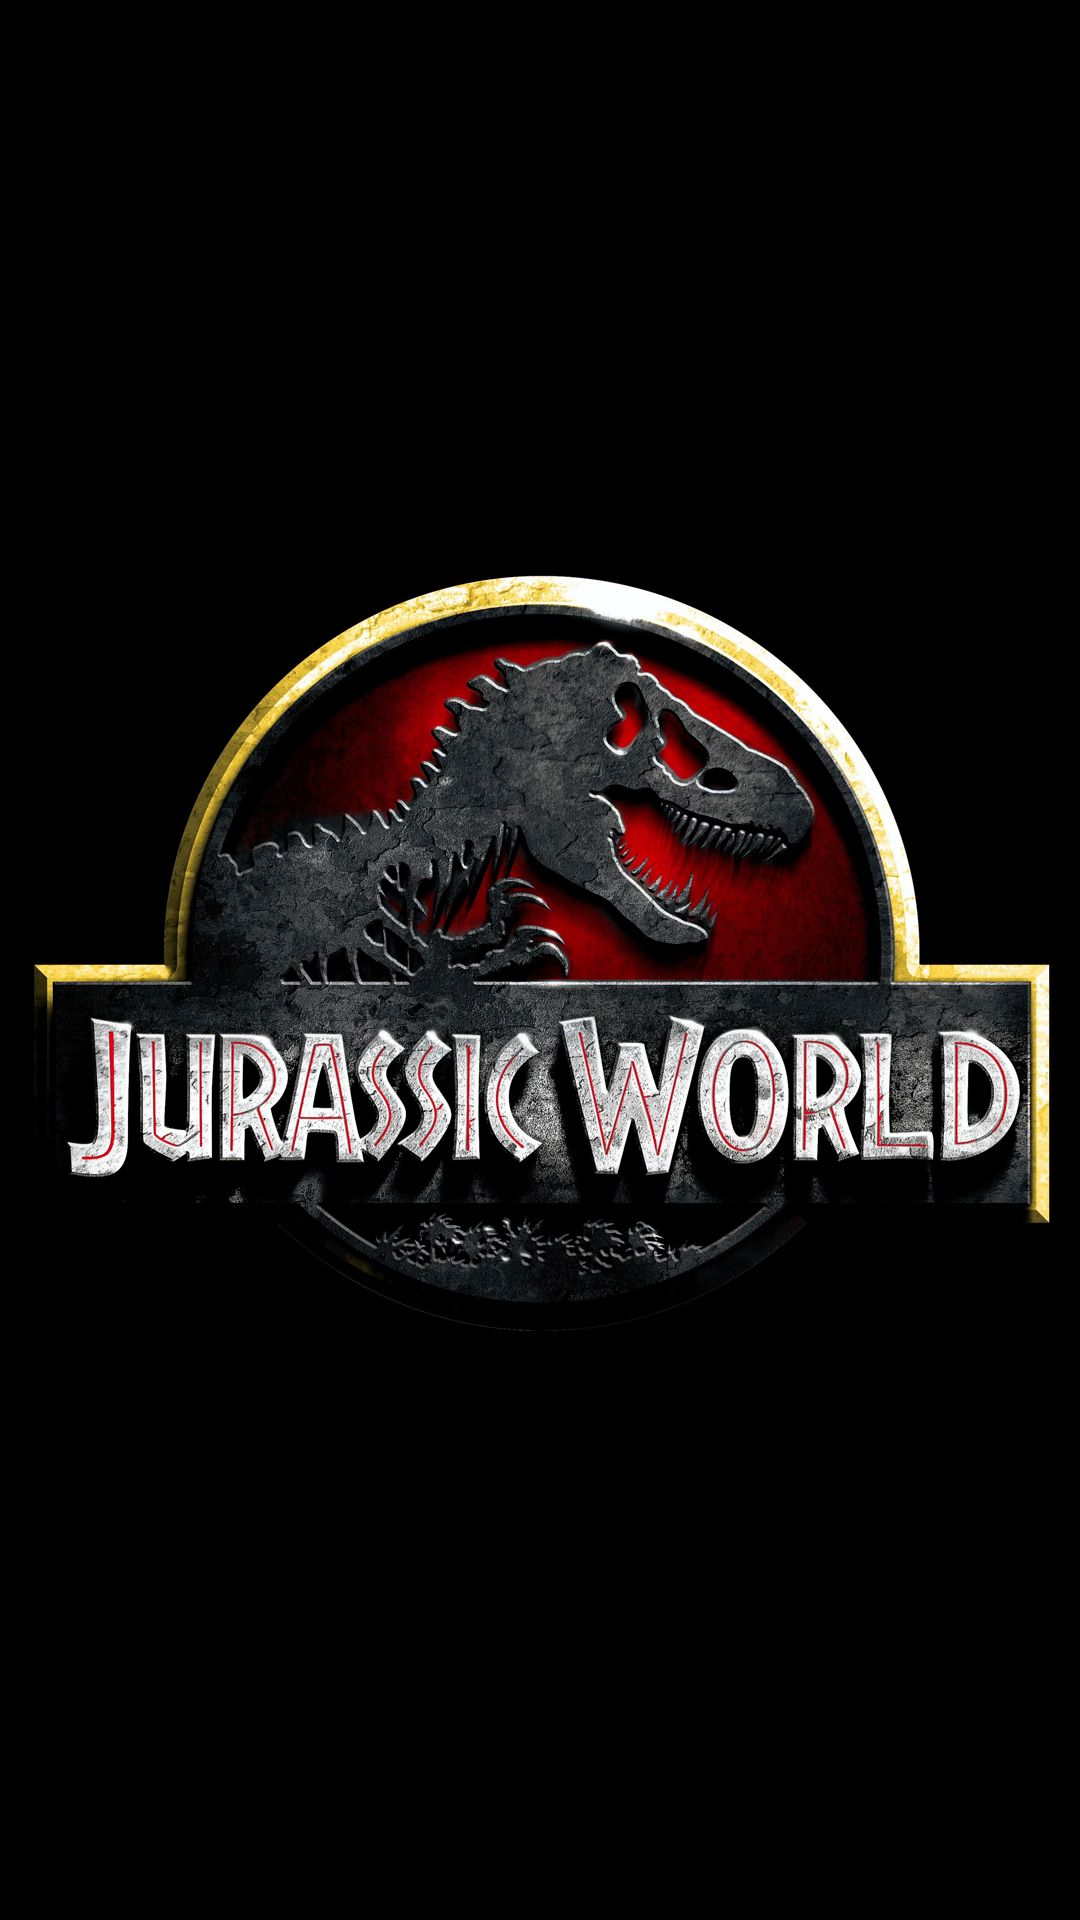 I colorized the Jurassic World logo to look like Jurassic Park